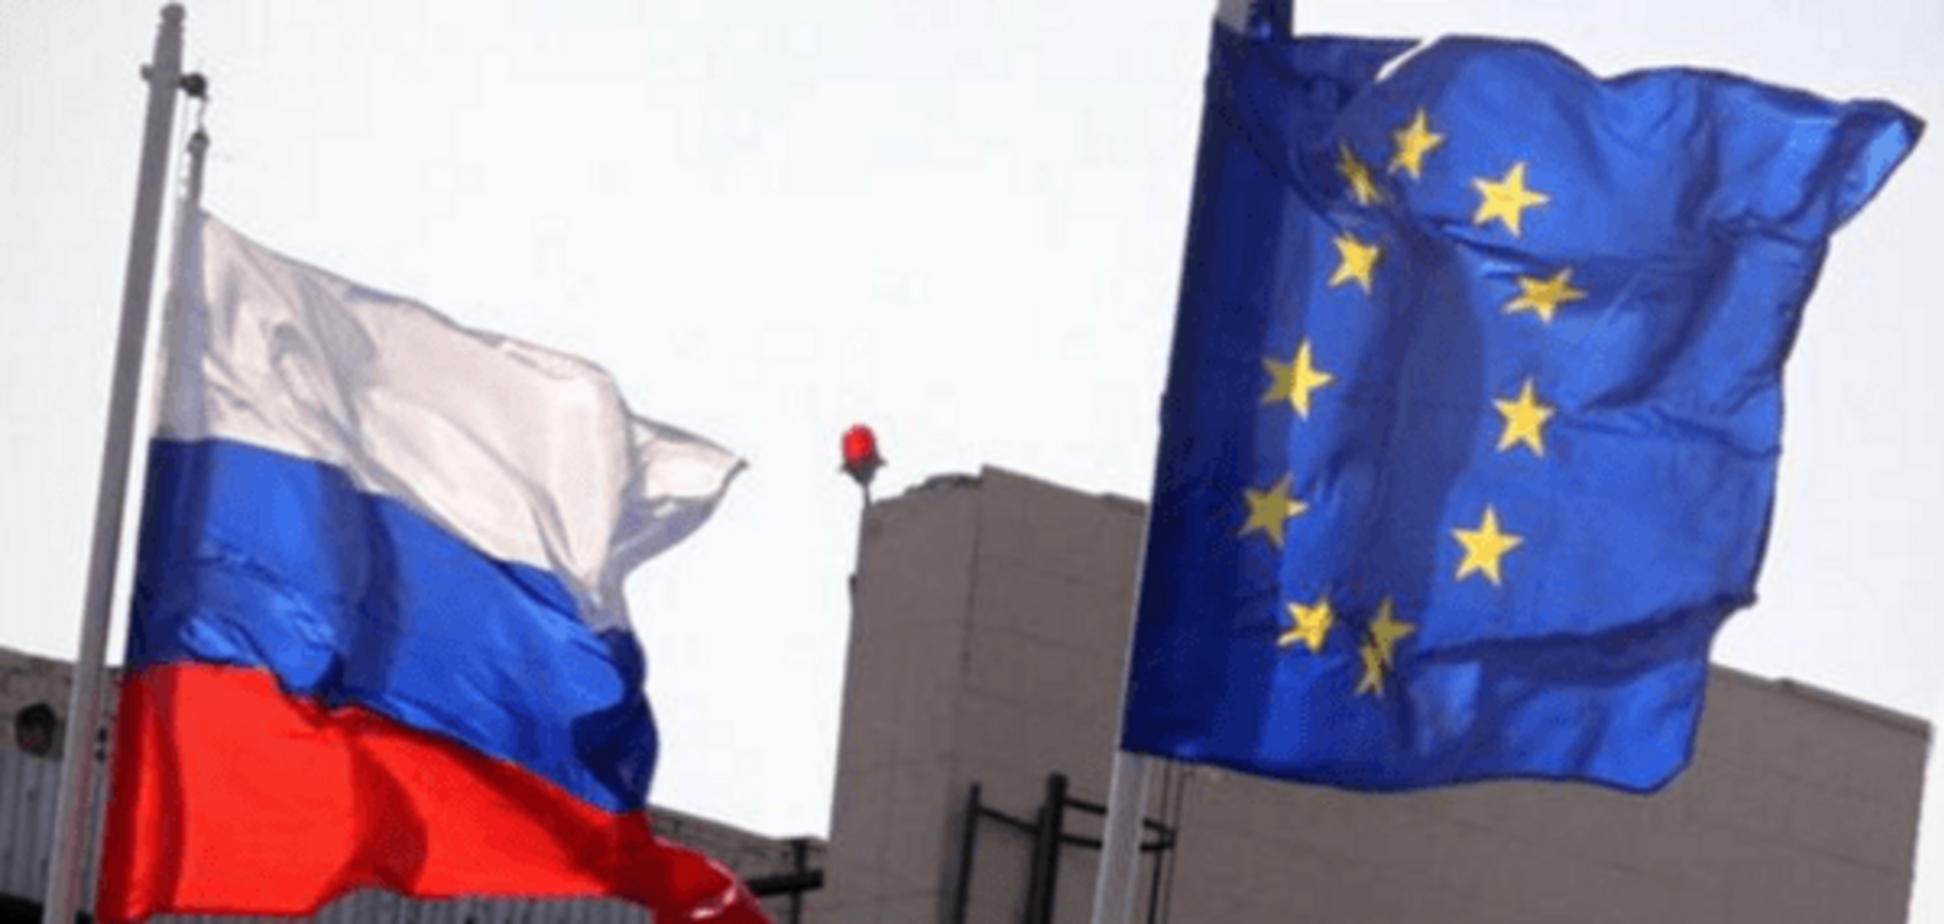 Прапори РФ і ЄС